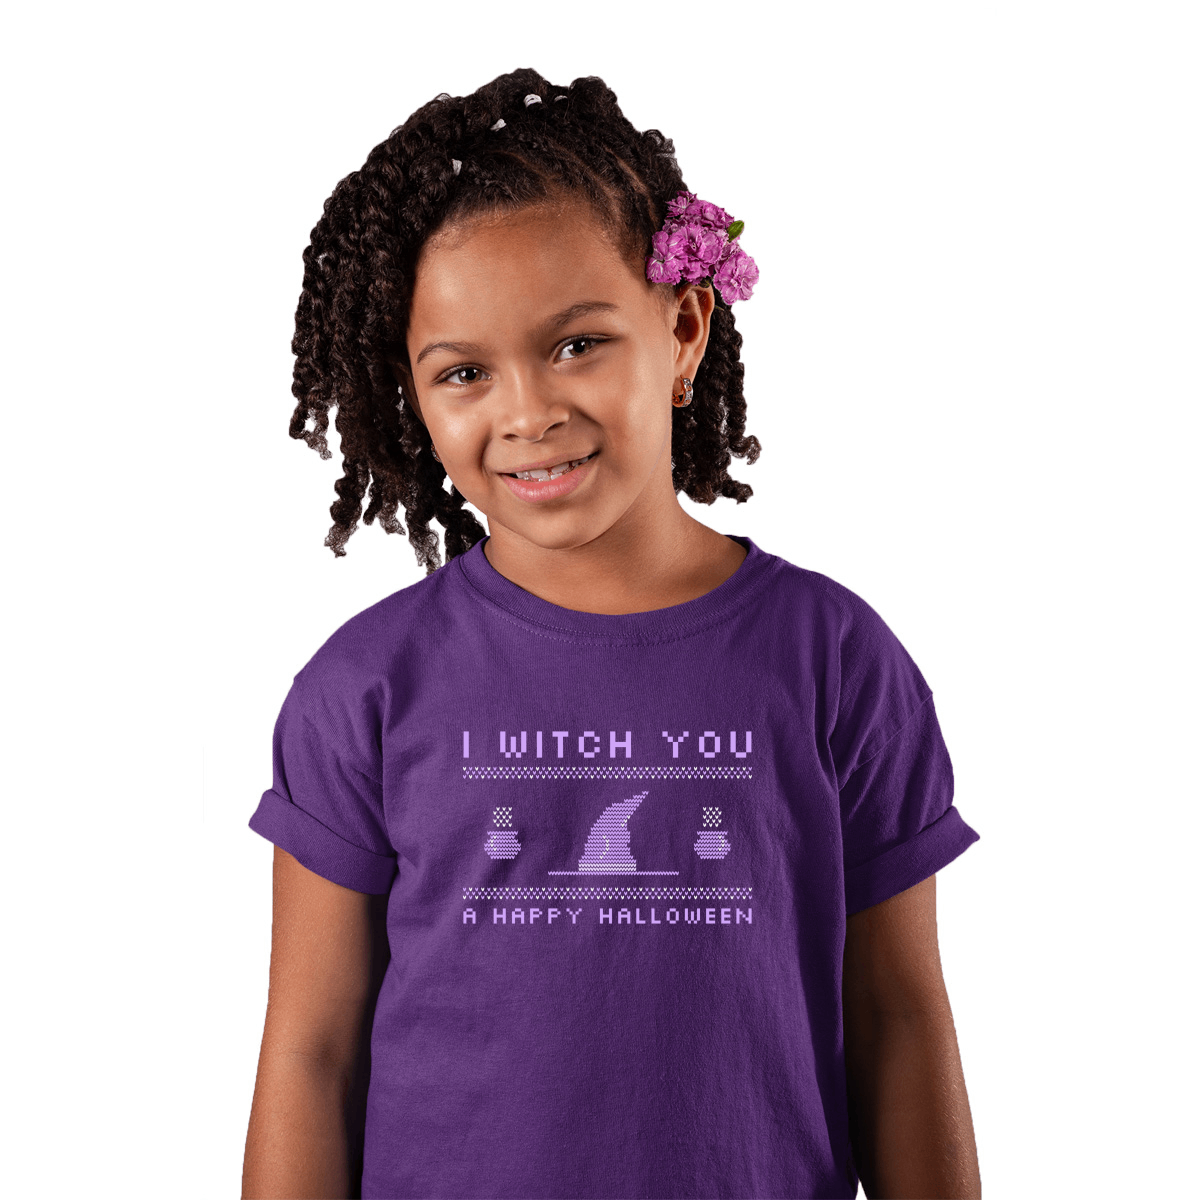 I Witch You a Happy Halloween Kids T-shirt | Purple